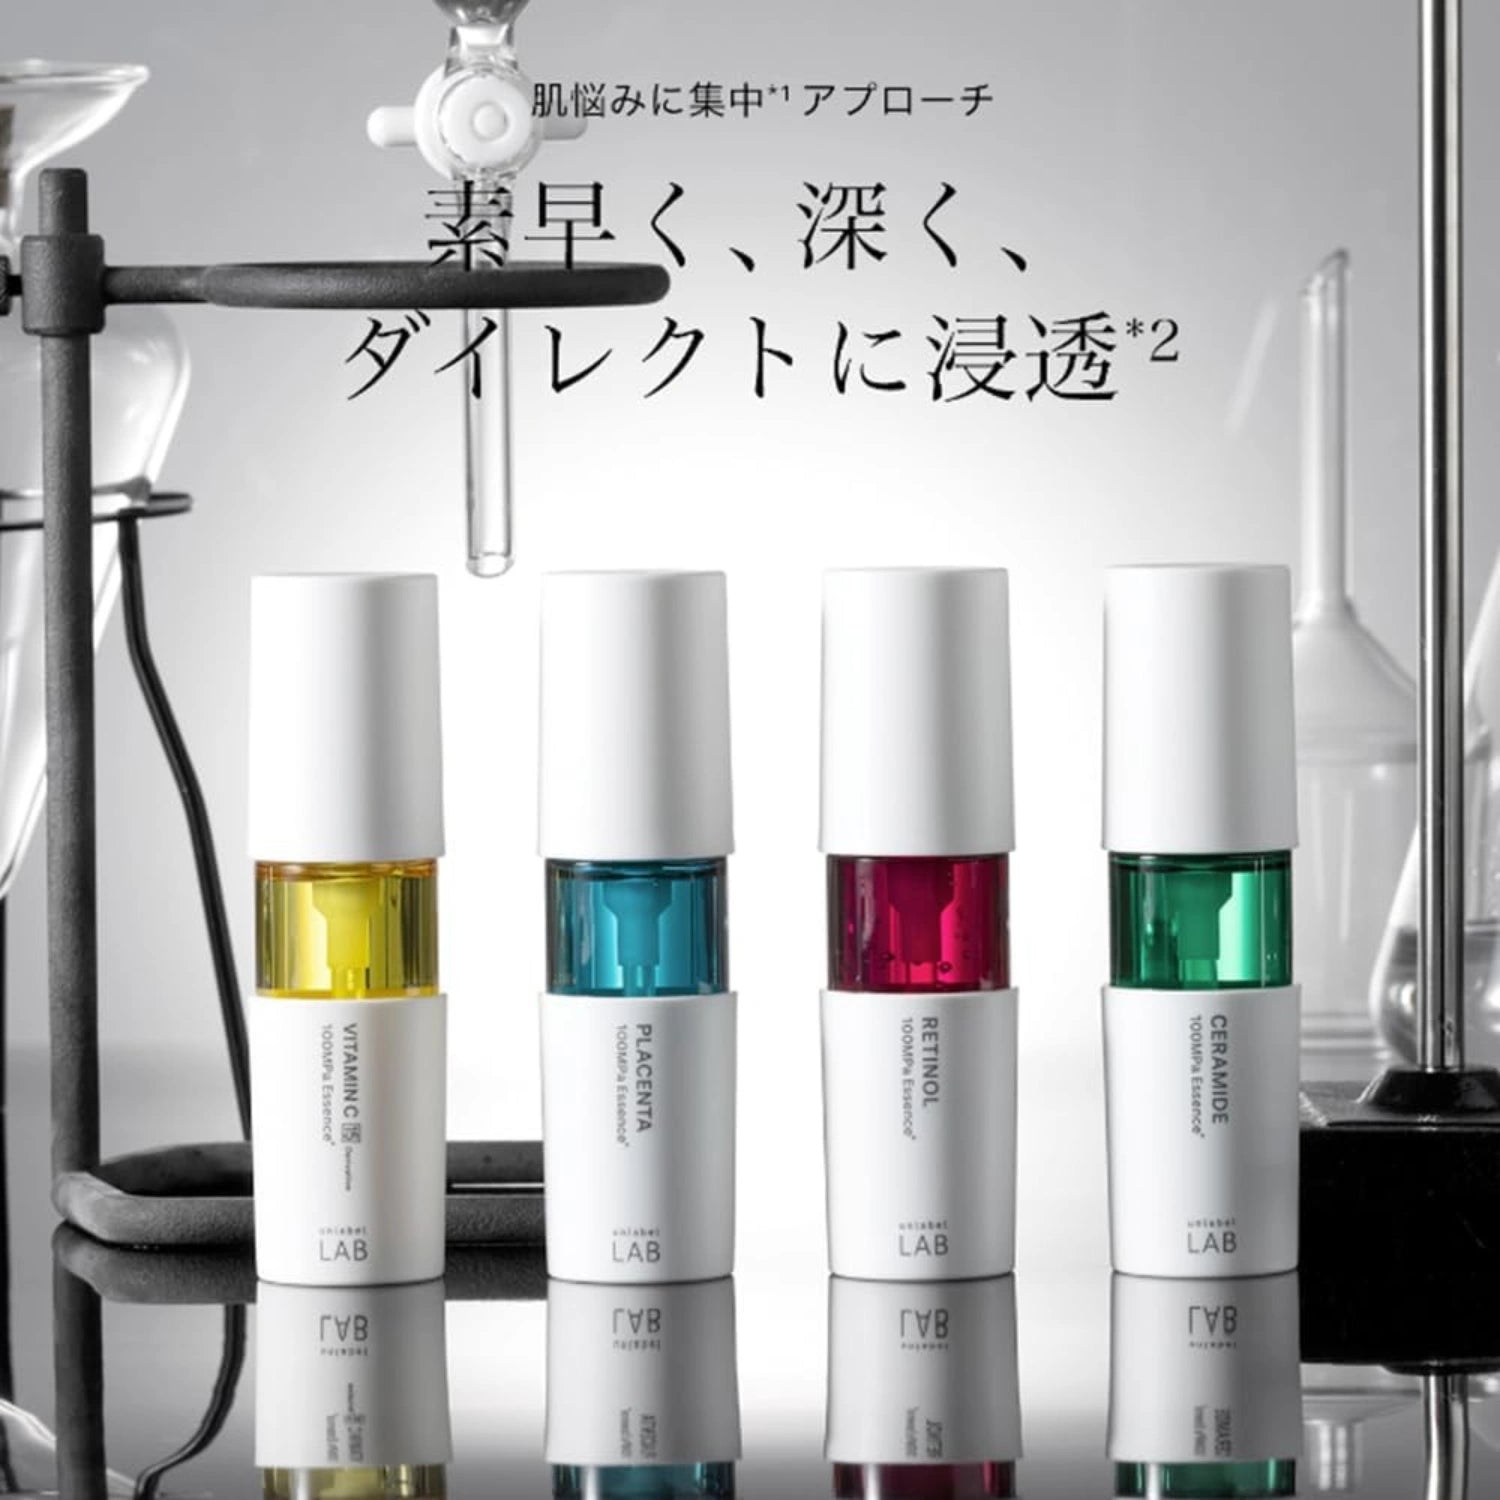 Unlabel LAB Retinol Essence Serum 50ml - Buy Me Japan